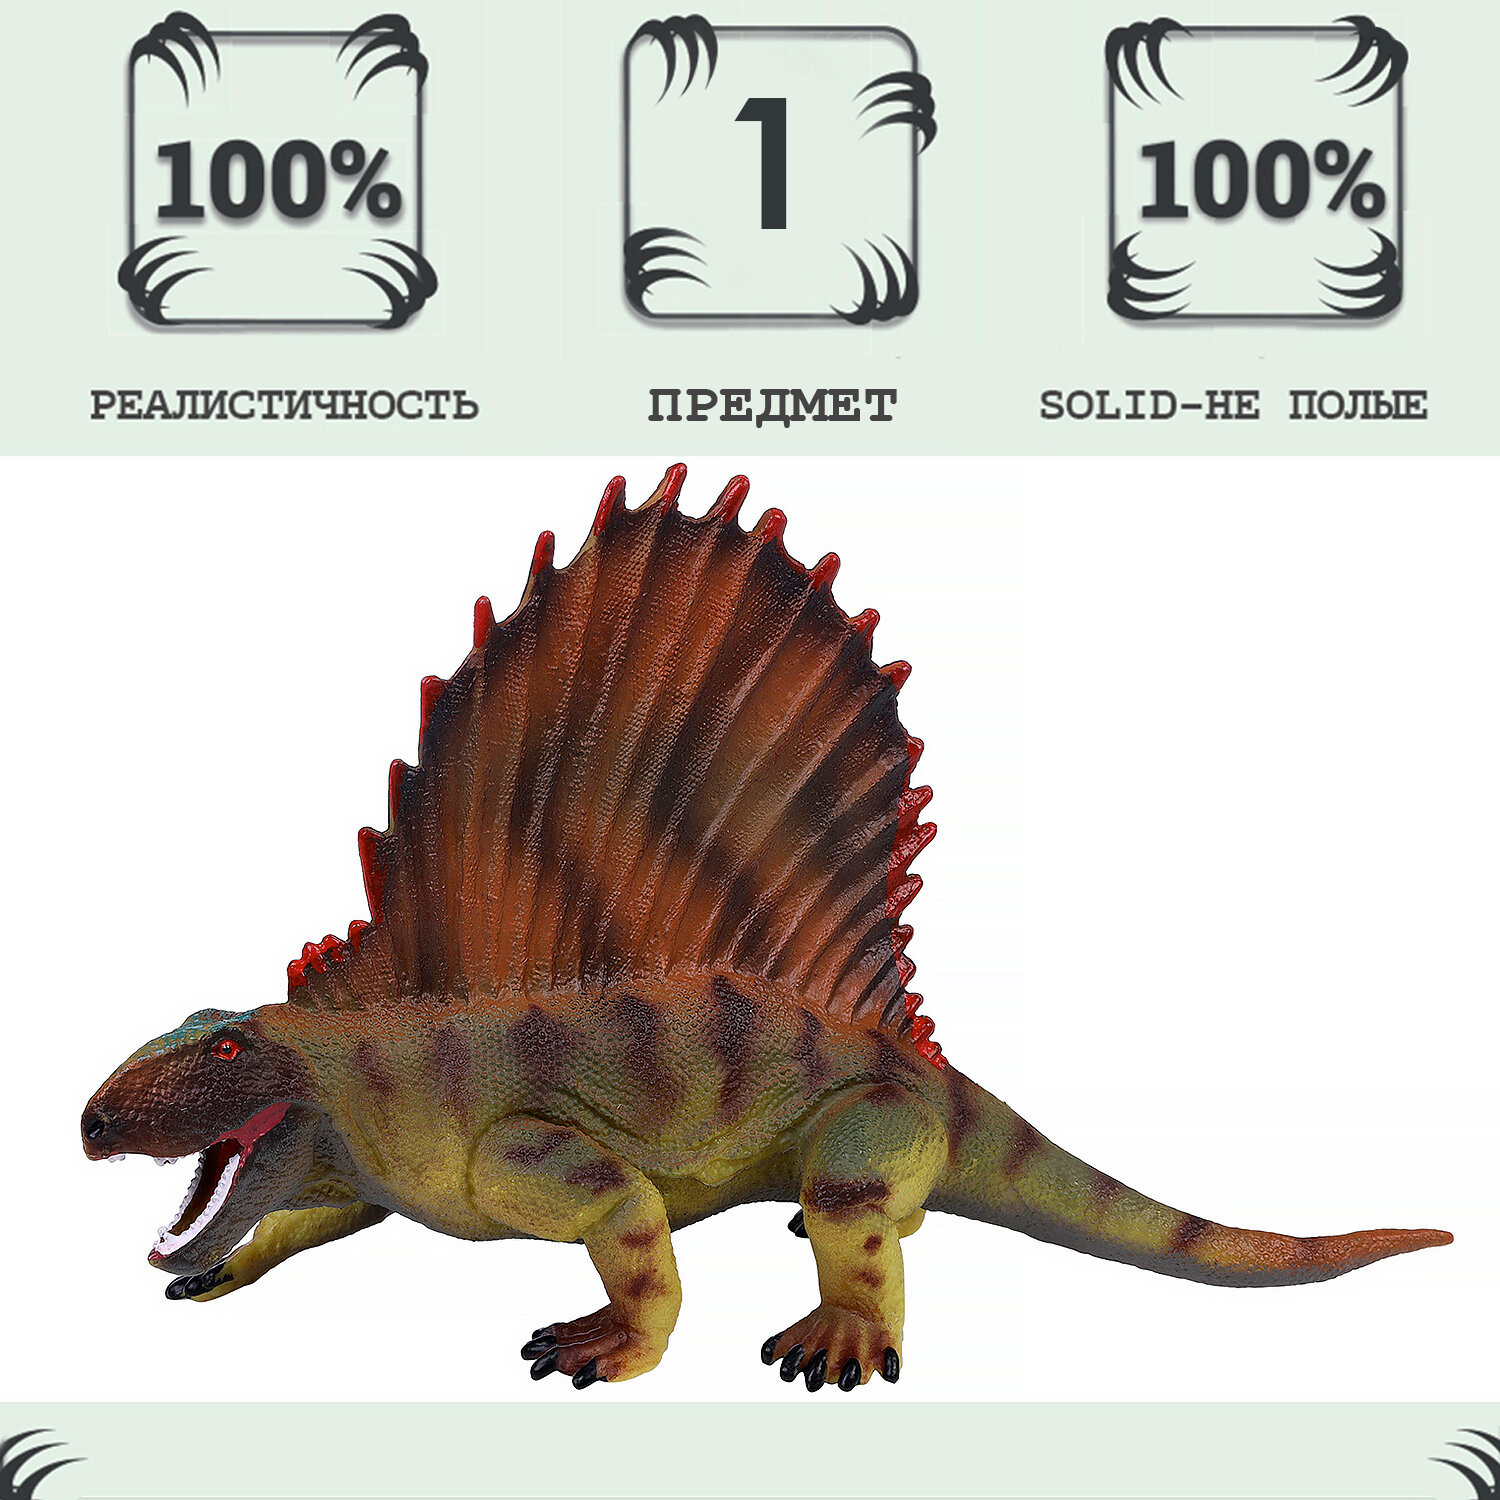 Игрушка динозавр серии "Мир динозавров" - Фигурка Диметродон